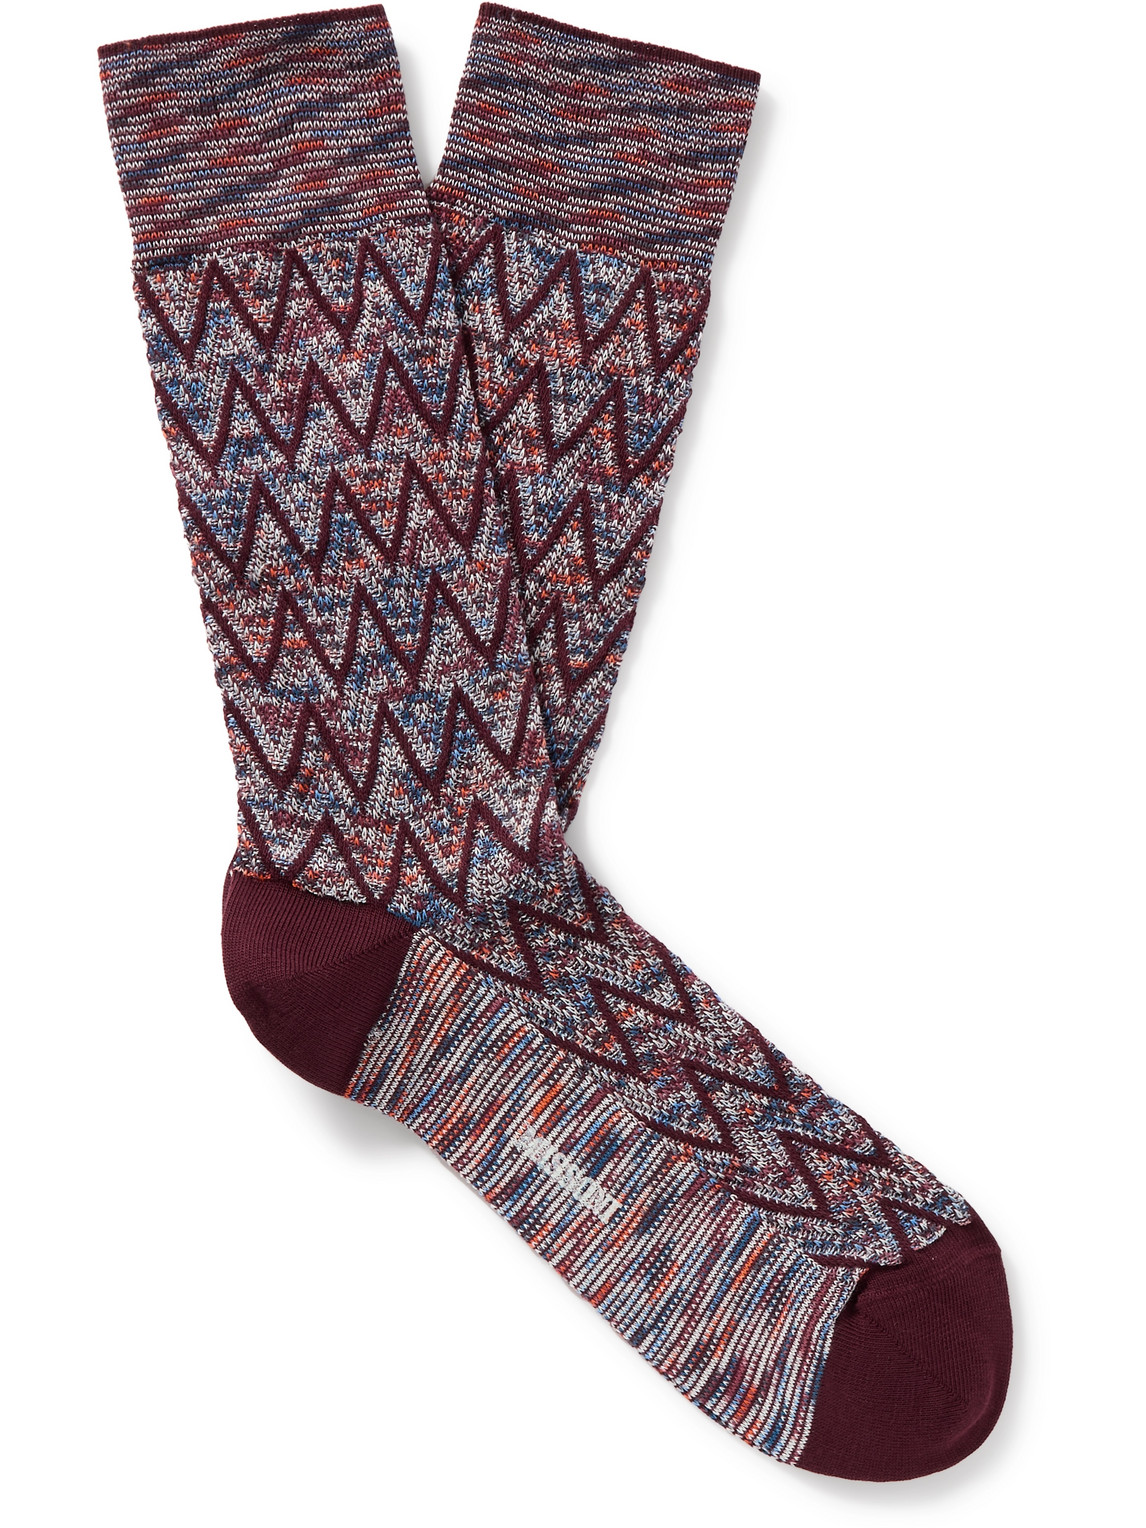 Missoni - Striped Crocheted Cotton-Blend Socks - Men - Burgundy - S von Missoni